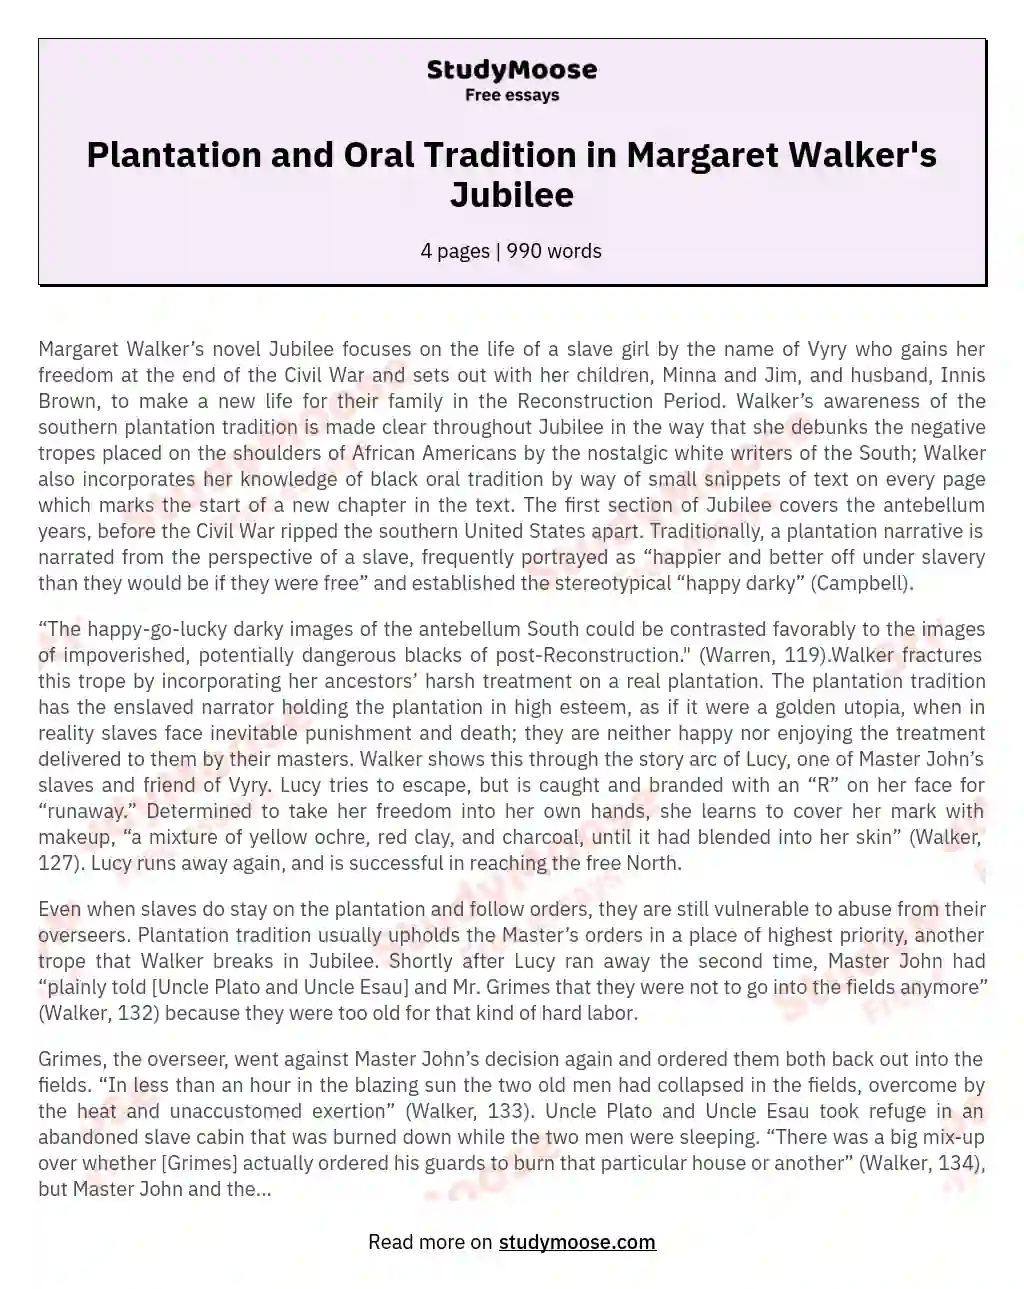 Plantation and Oral Tradition in Margaret Walker's Jubilee